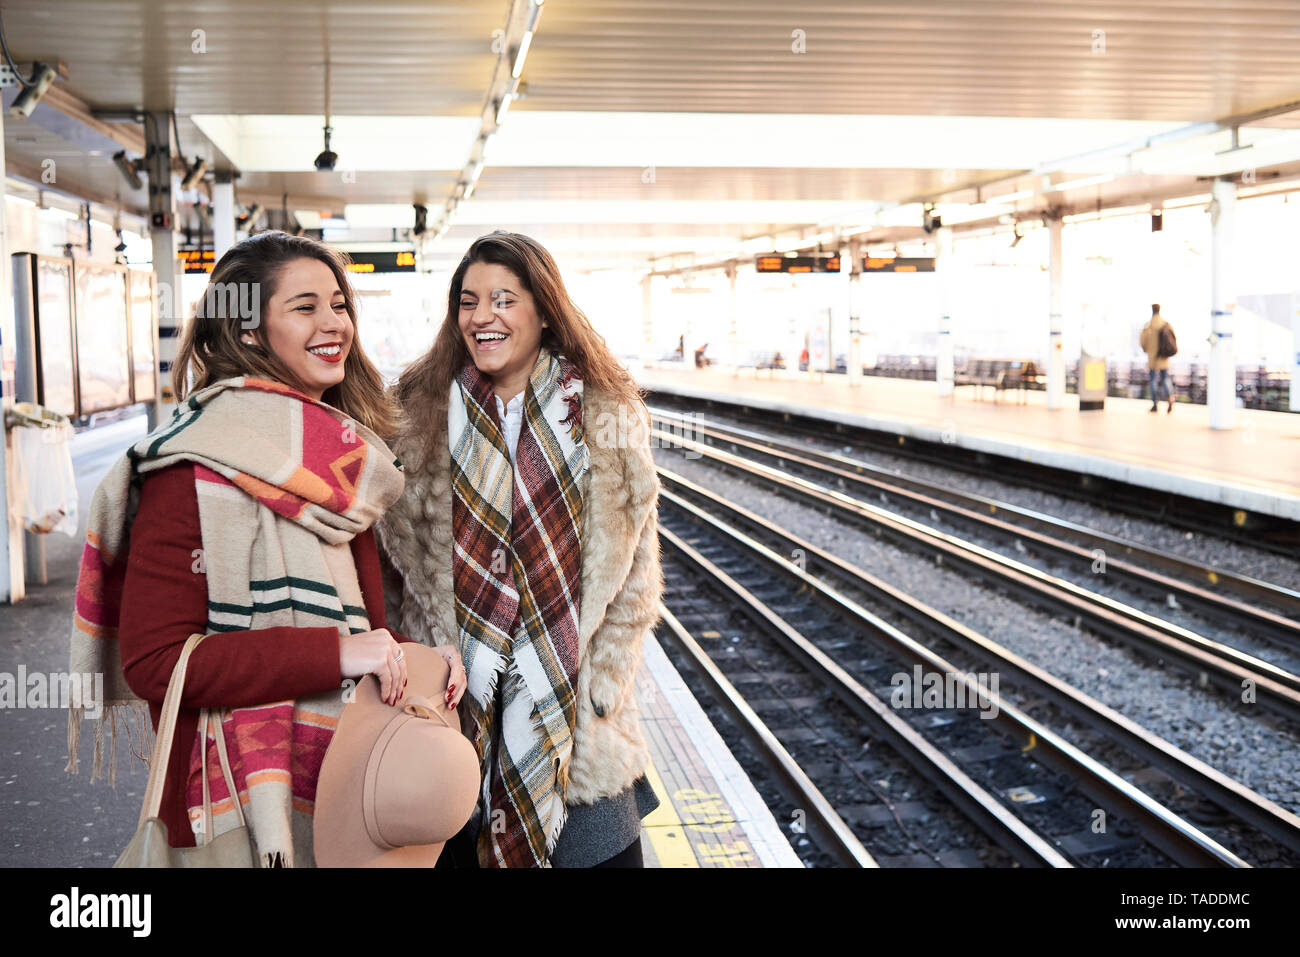 UK, London, two happy women at underground station platform Stock Photo